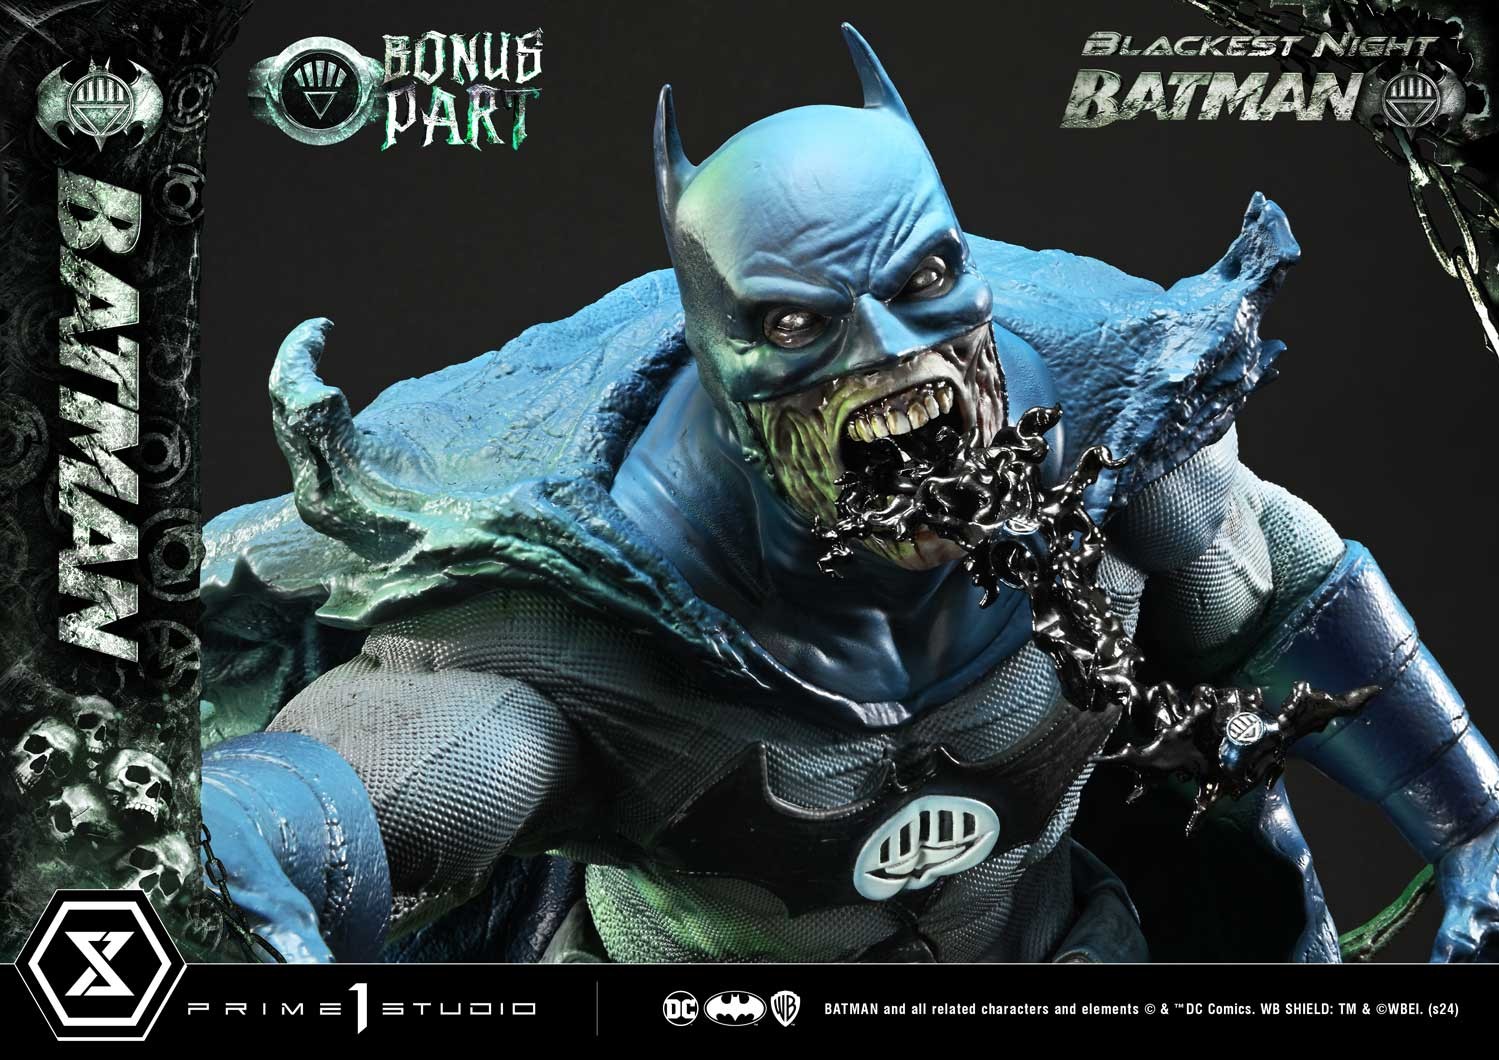 Batman Bonus Version (Prototype Shown) View 6